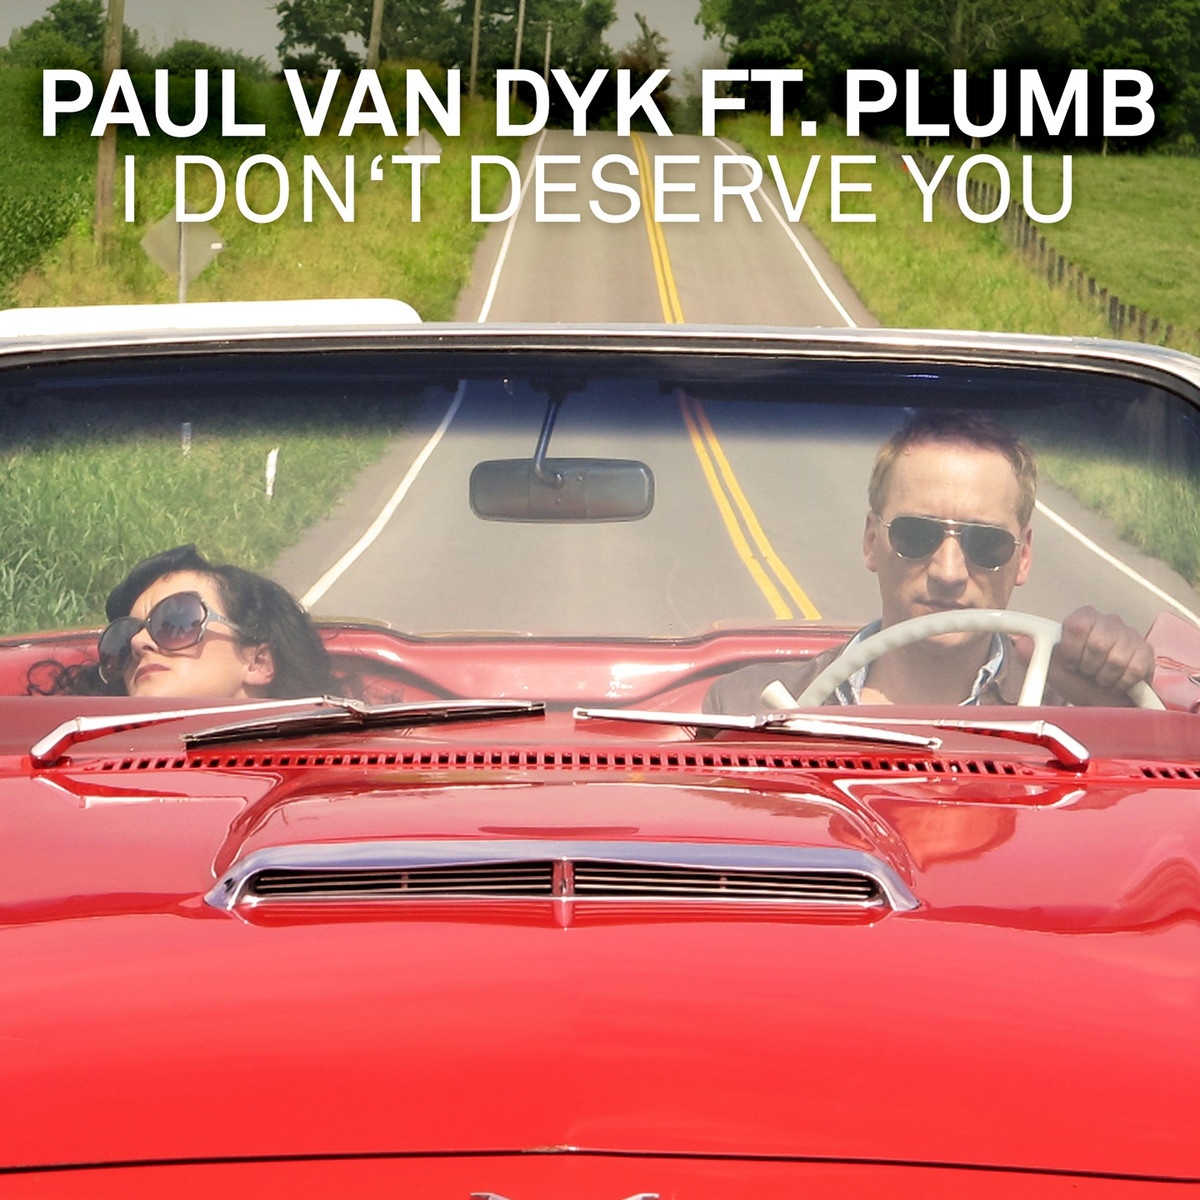 I Don't Deserve You (Maor Levi & Bluestone Remix)